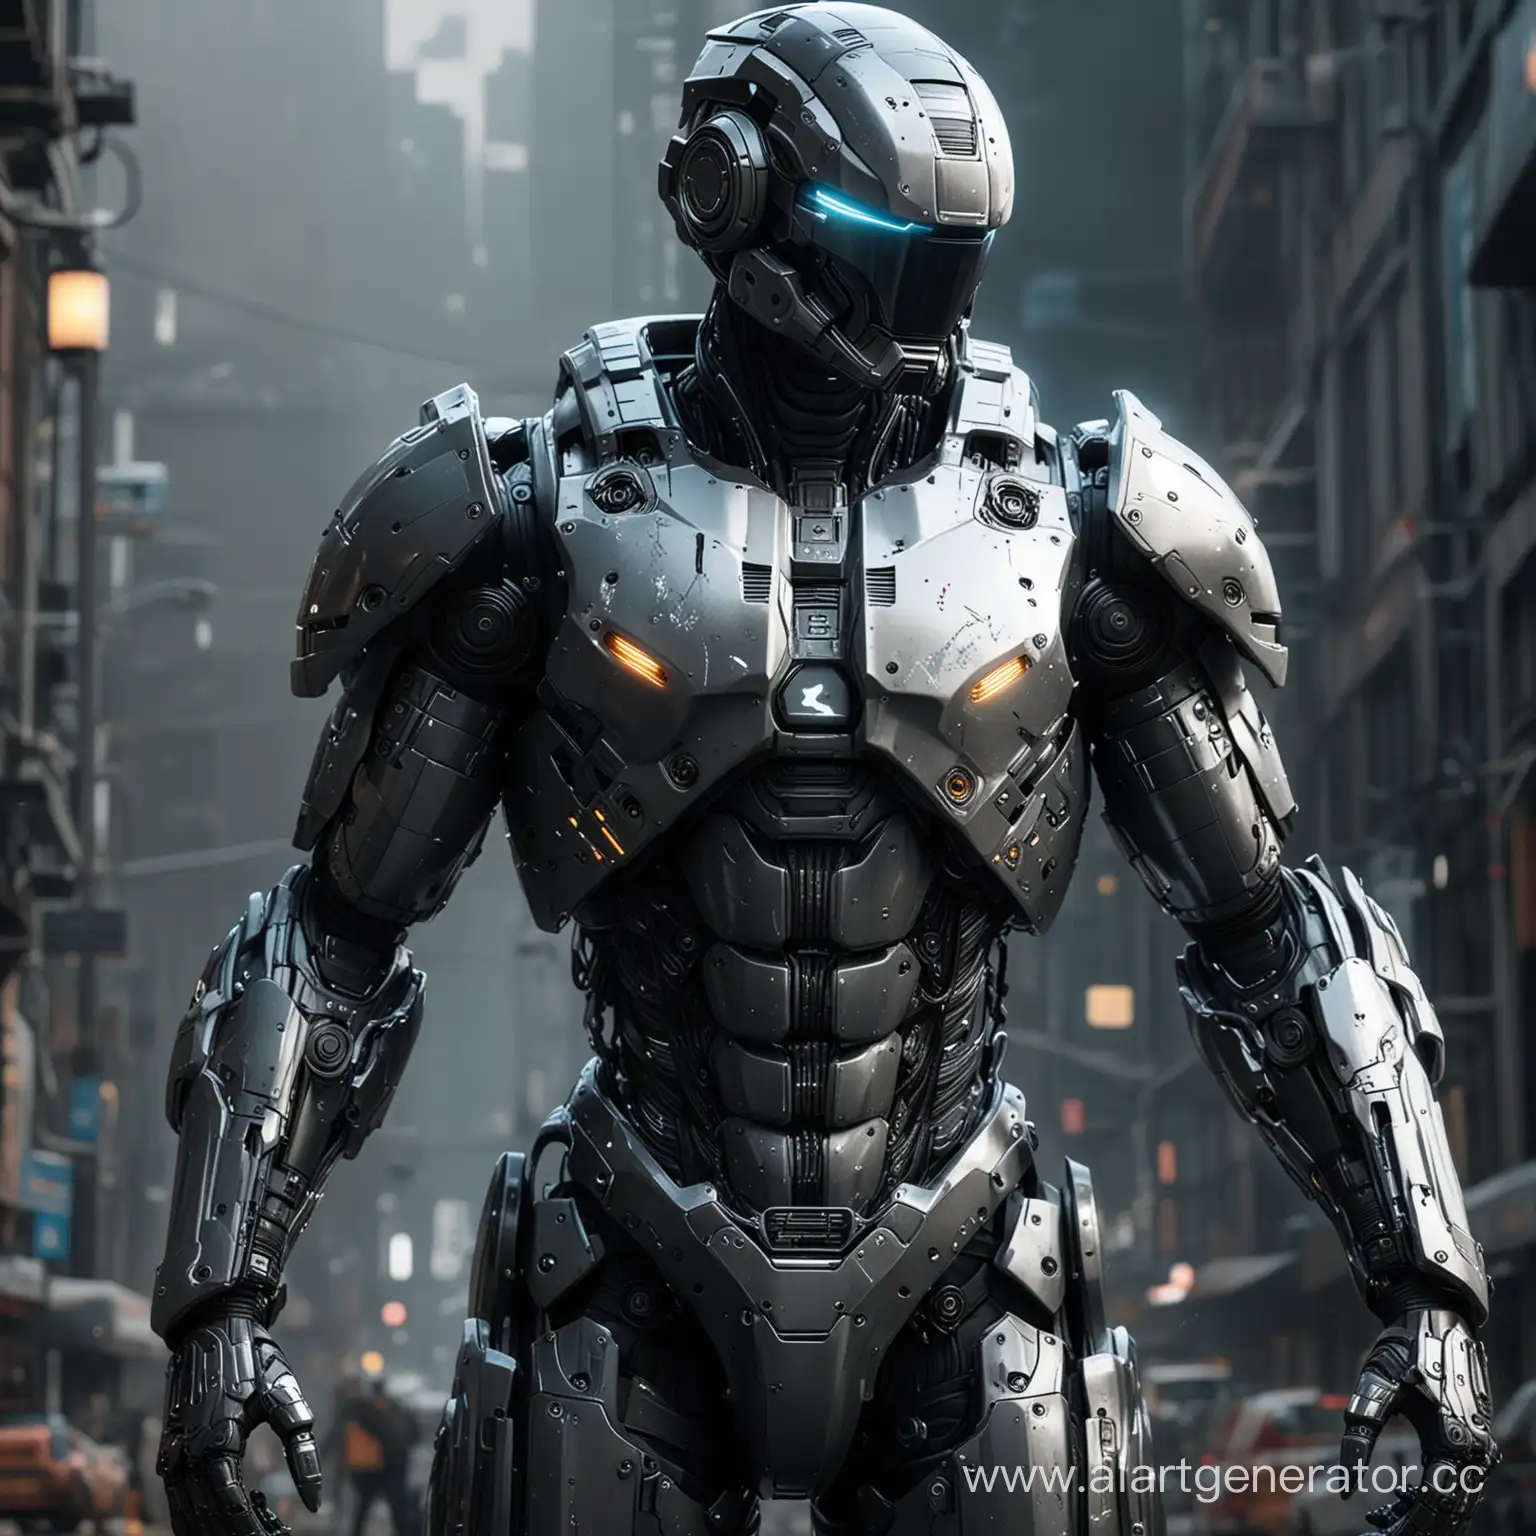 Futuristic-HighTech-WarriorRobot-Robocop-Costume-in-PostApocalyptic-Era